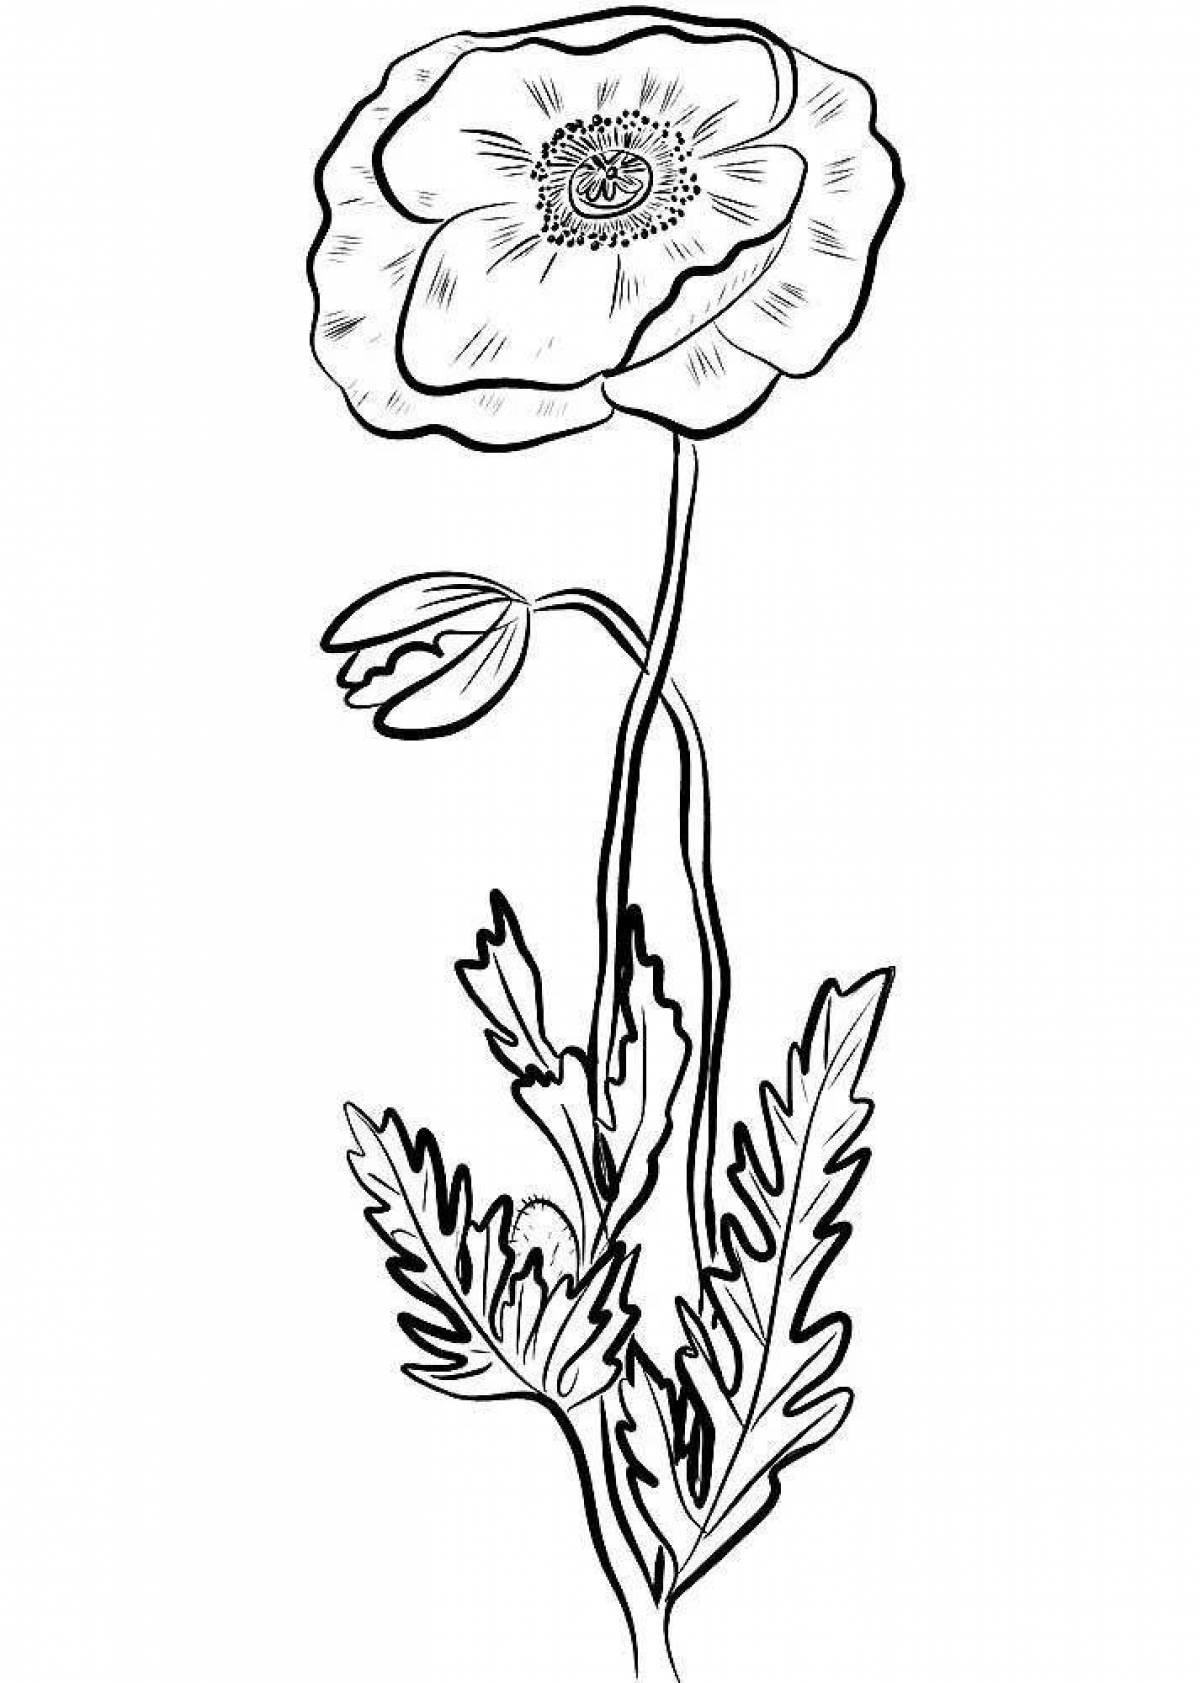 Coloring page elegant poppy flower